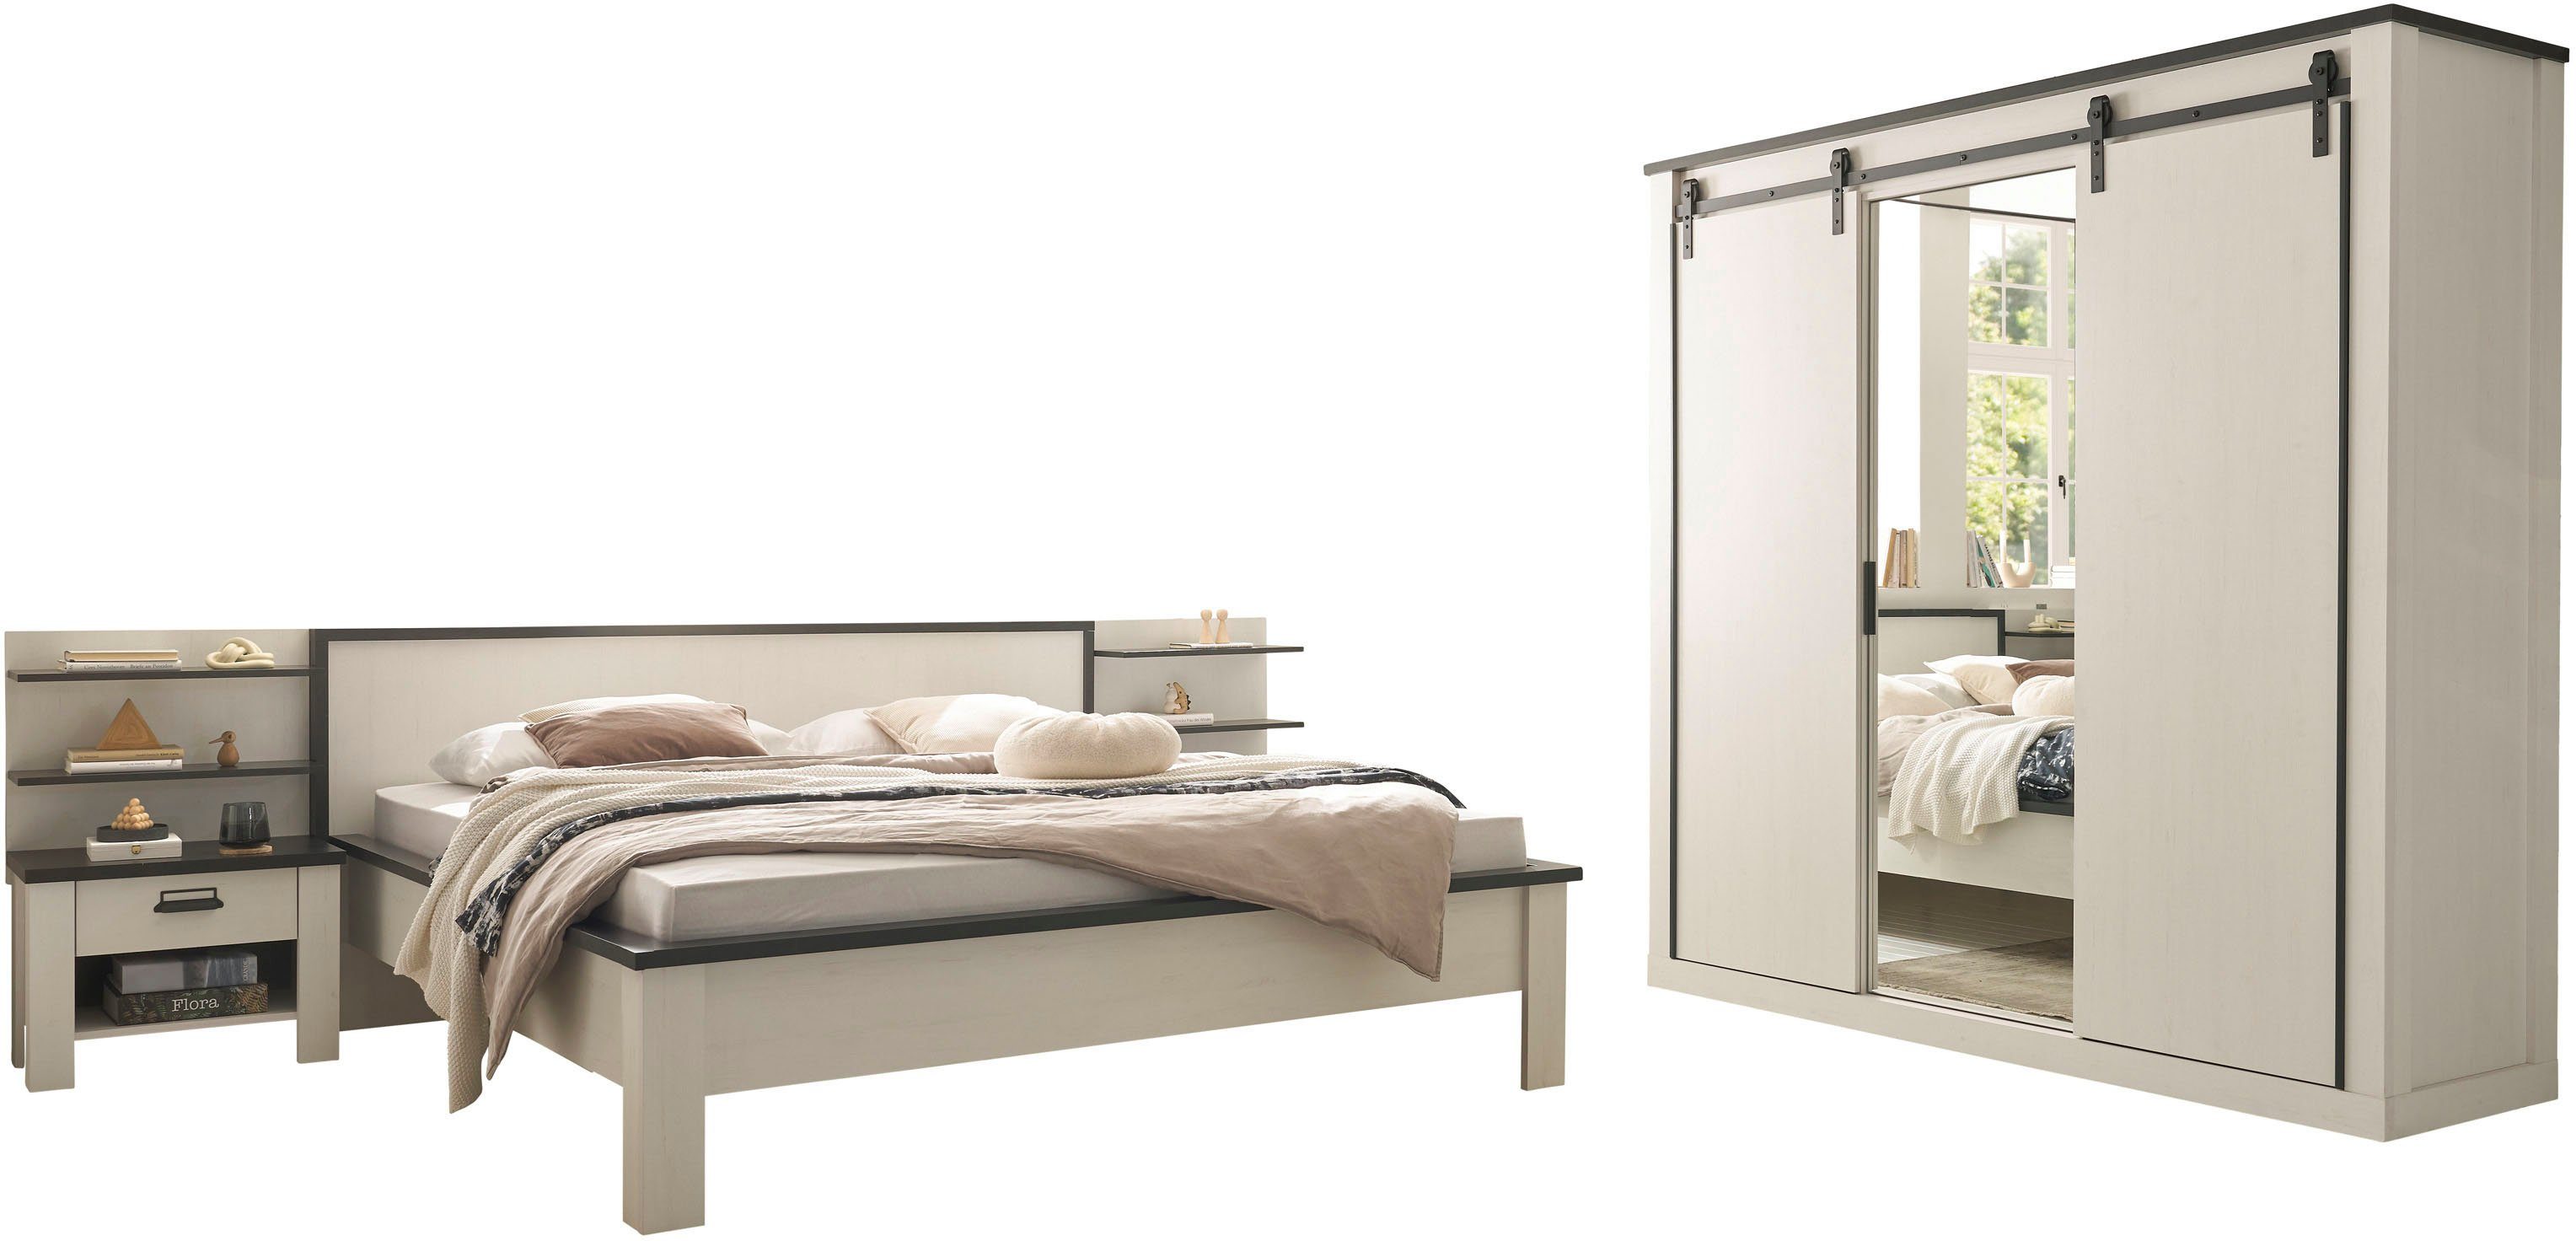 home affaire slaapkamerserie sherwood ligoppervlak 180 x 200 cm, kast 3-deurs 201 cm breed (6-delig) wit